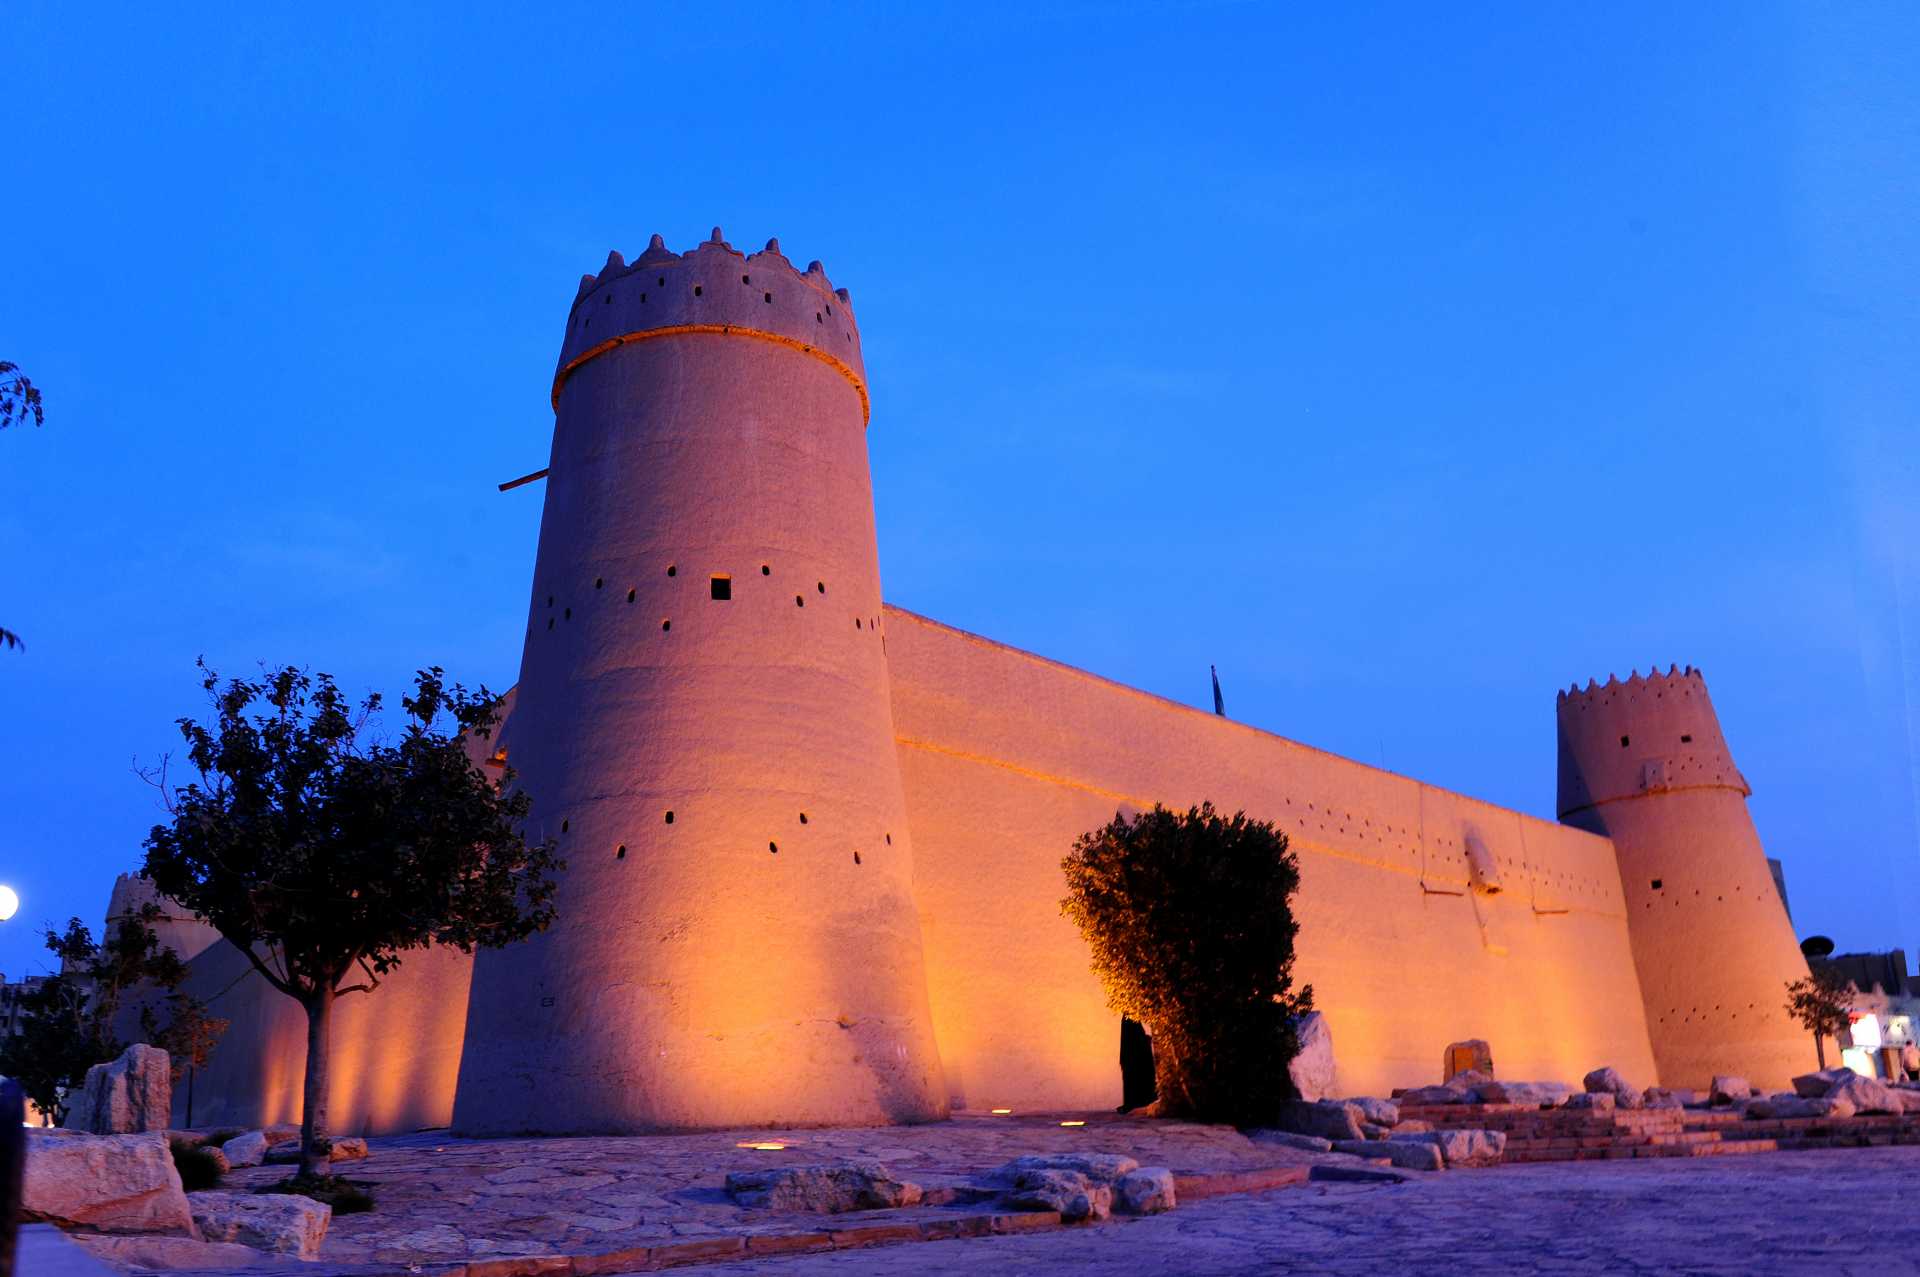 Al Masmak Palace Museum in Riyadh - Welcome Saudi